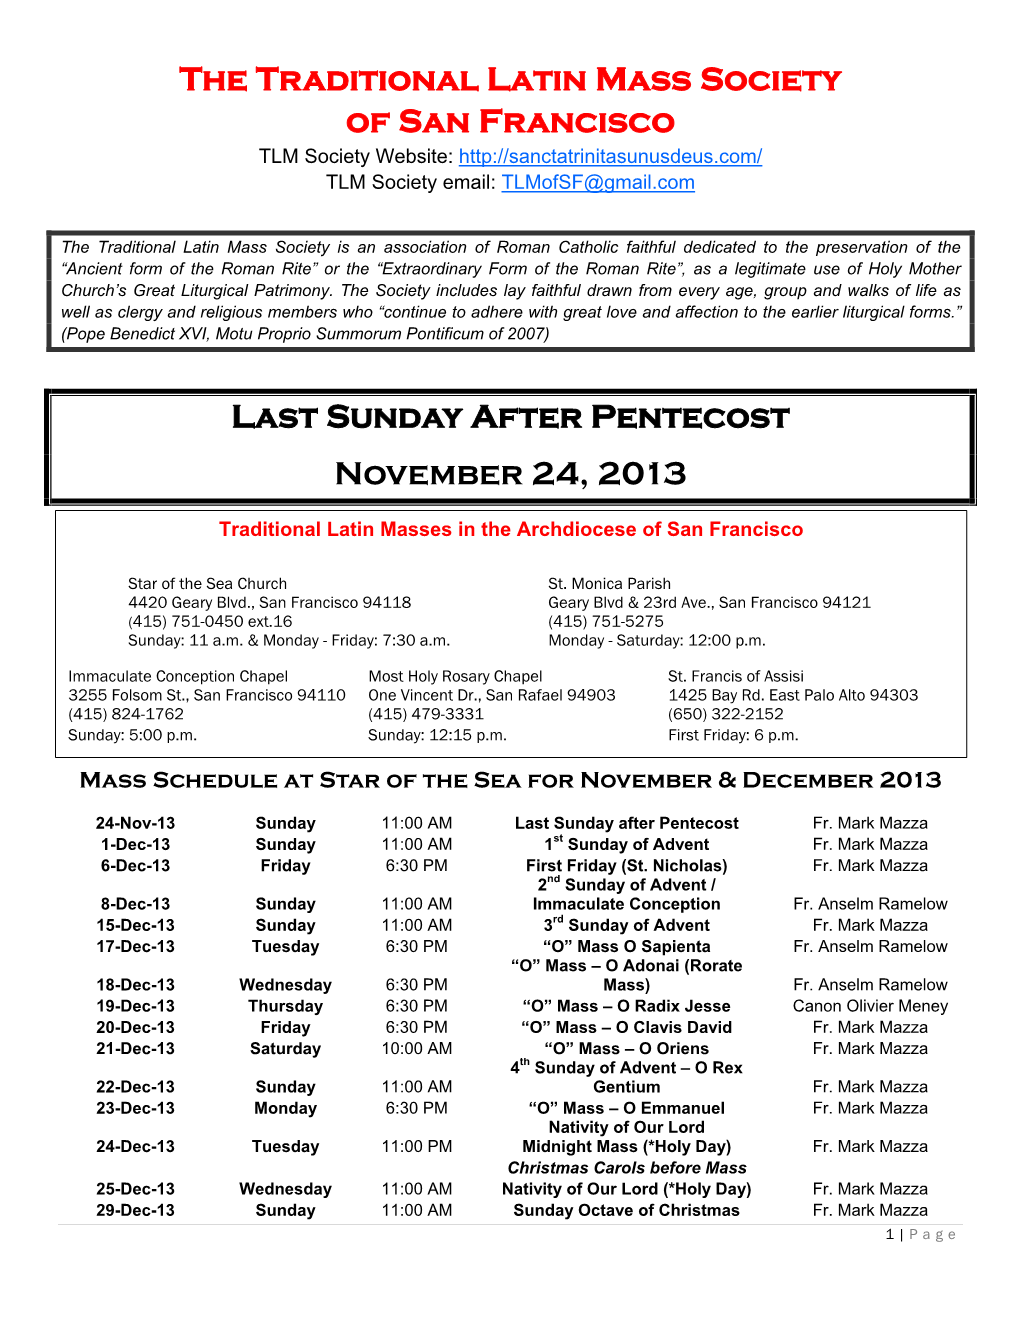 Last Sunday After Pentecost November 24, 2013